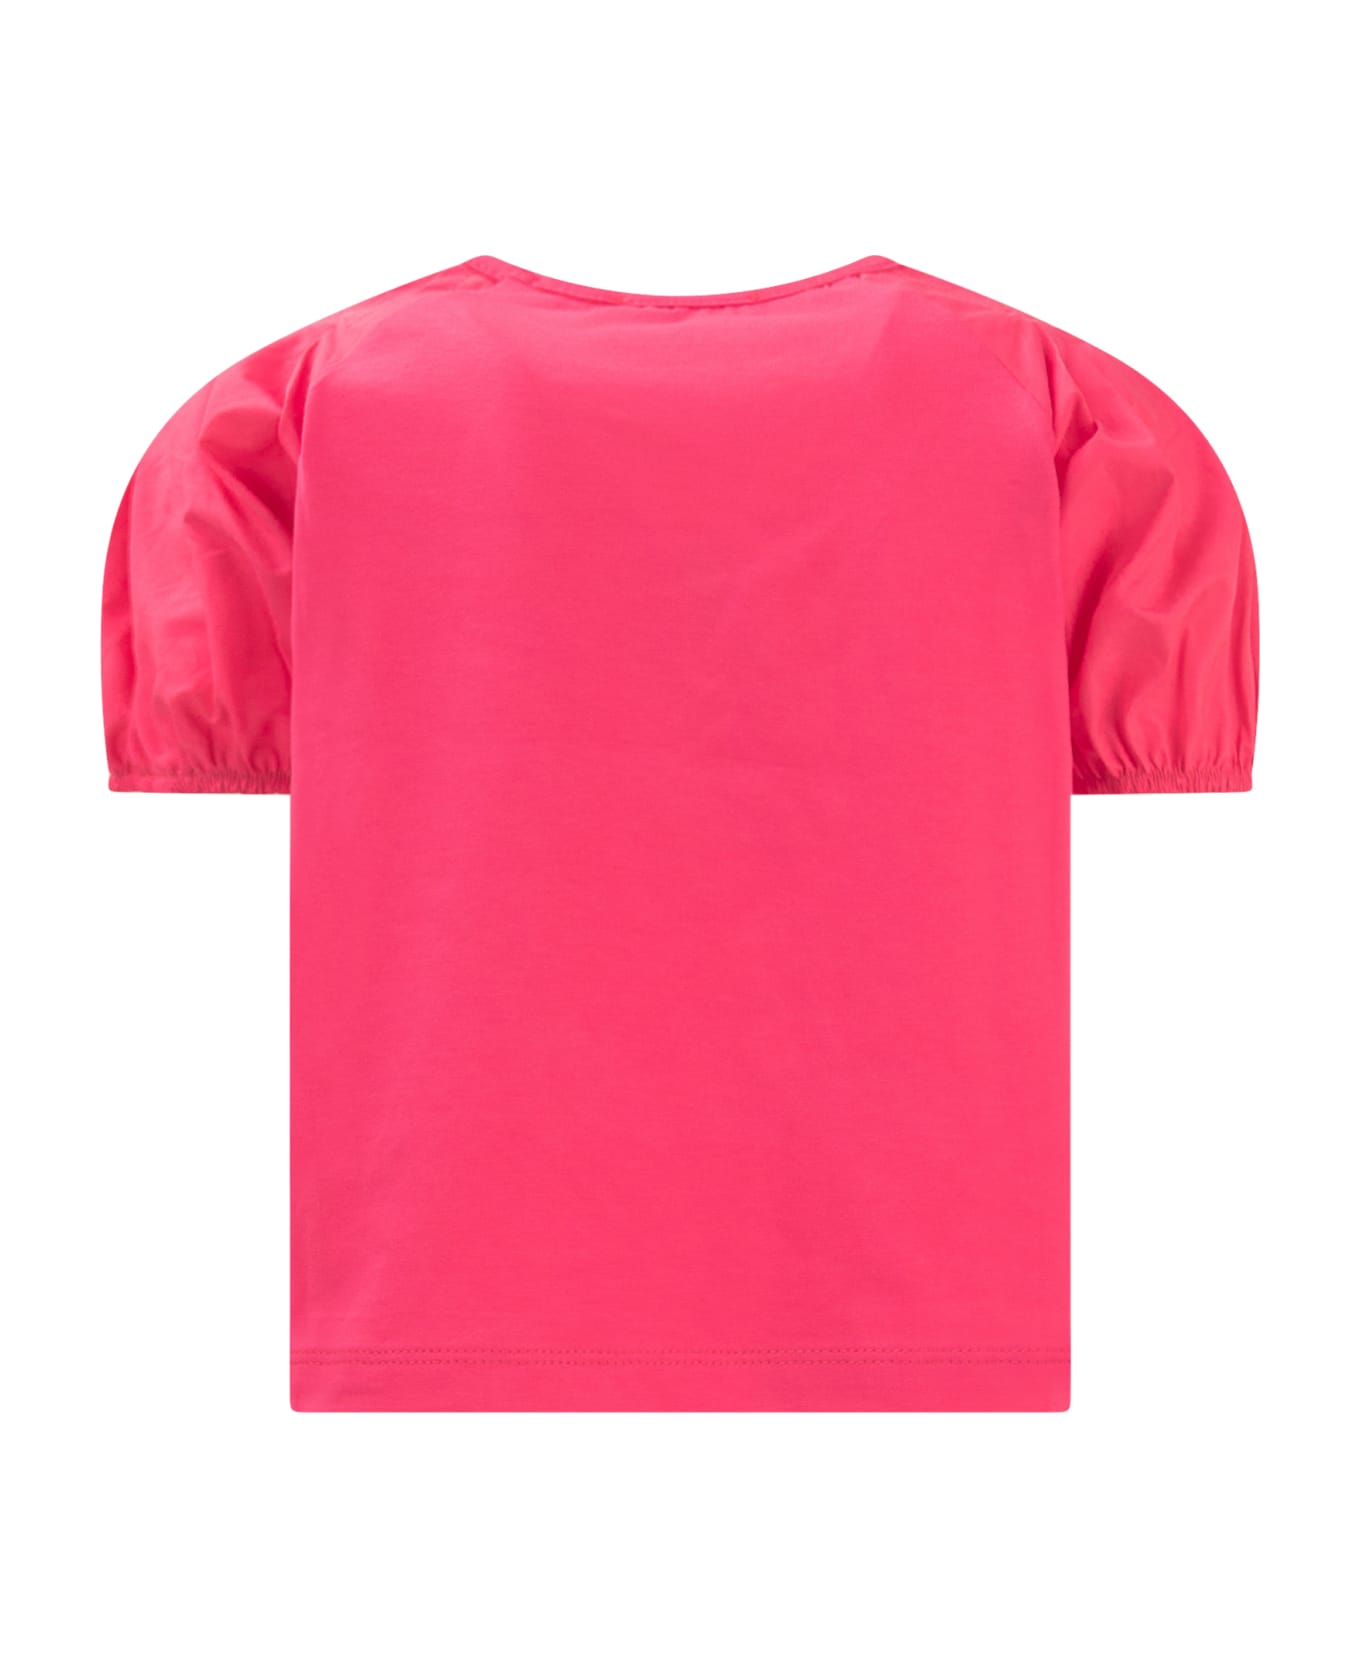 Monnalisa T-shirt With Rhinestones - ROSA PEACH